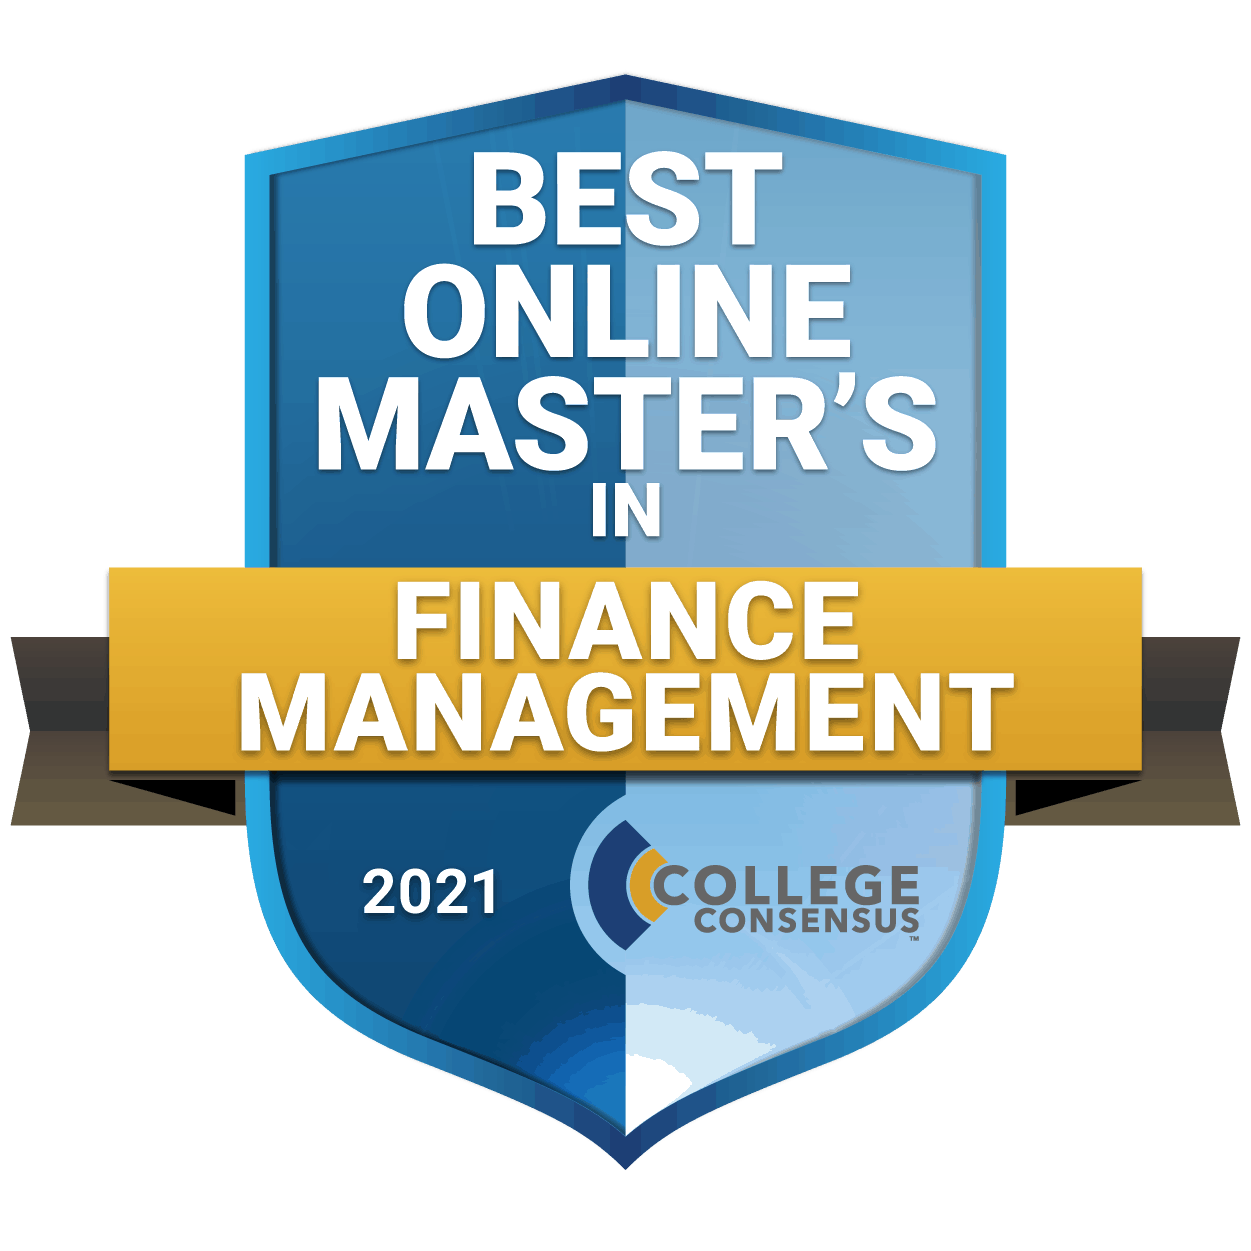 Best Online Master’s in Finance Management Programs 2021 TOP CONSENSUS RANKED ONLINE MASTER’S